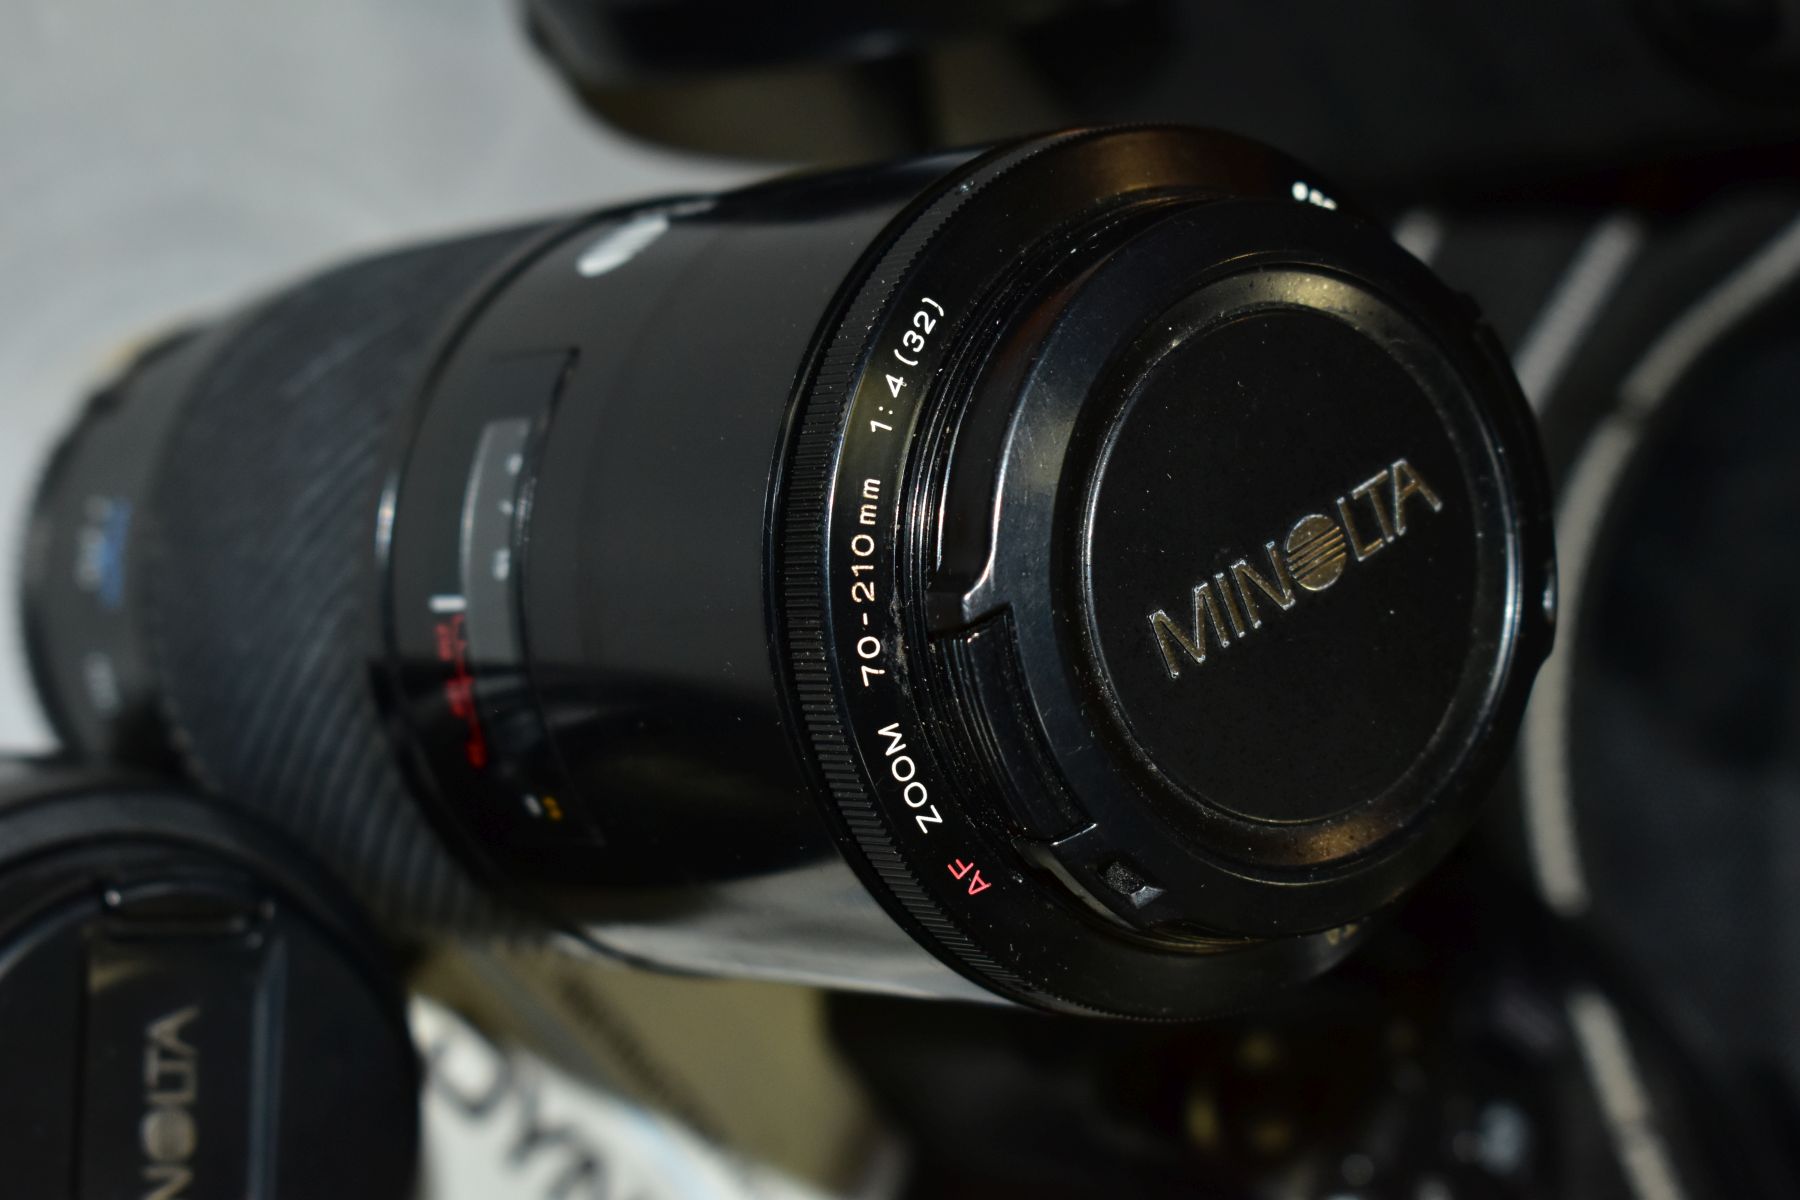 PHOTOGRAPHIC EQUIPMENT comprising a Minolta Dynax 300SI camera body, Minolta 35-70 zoom lens, - Image 3 of 9